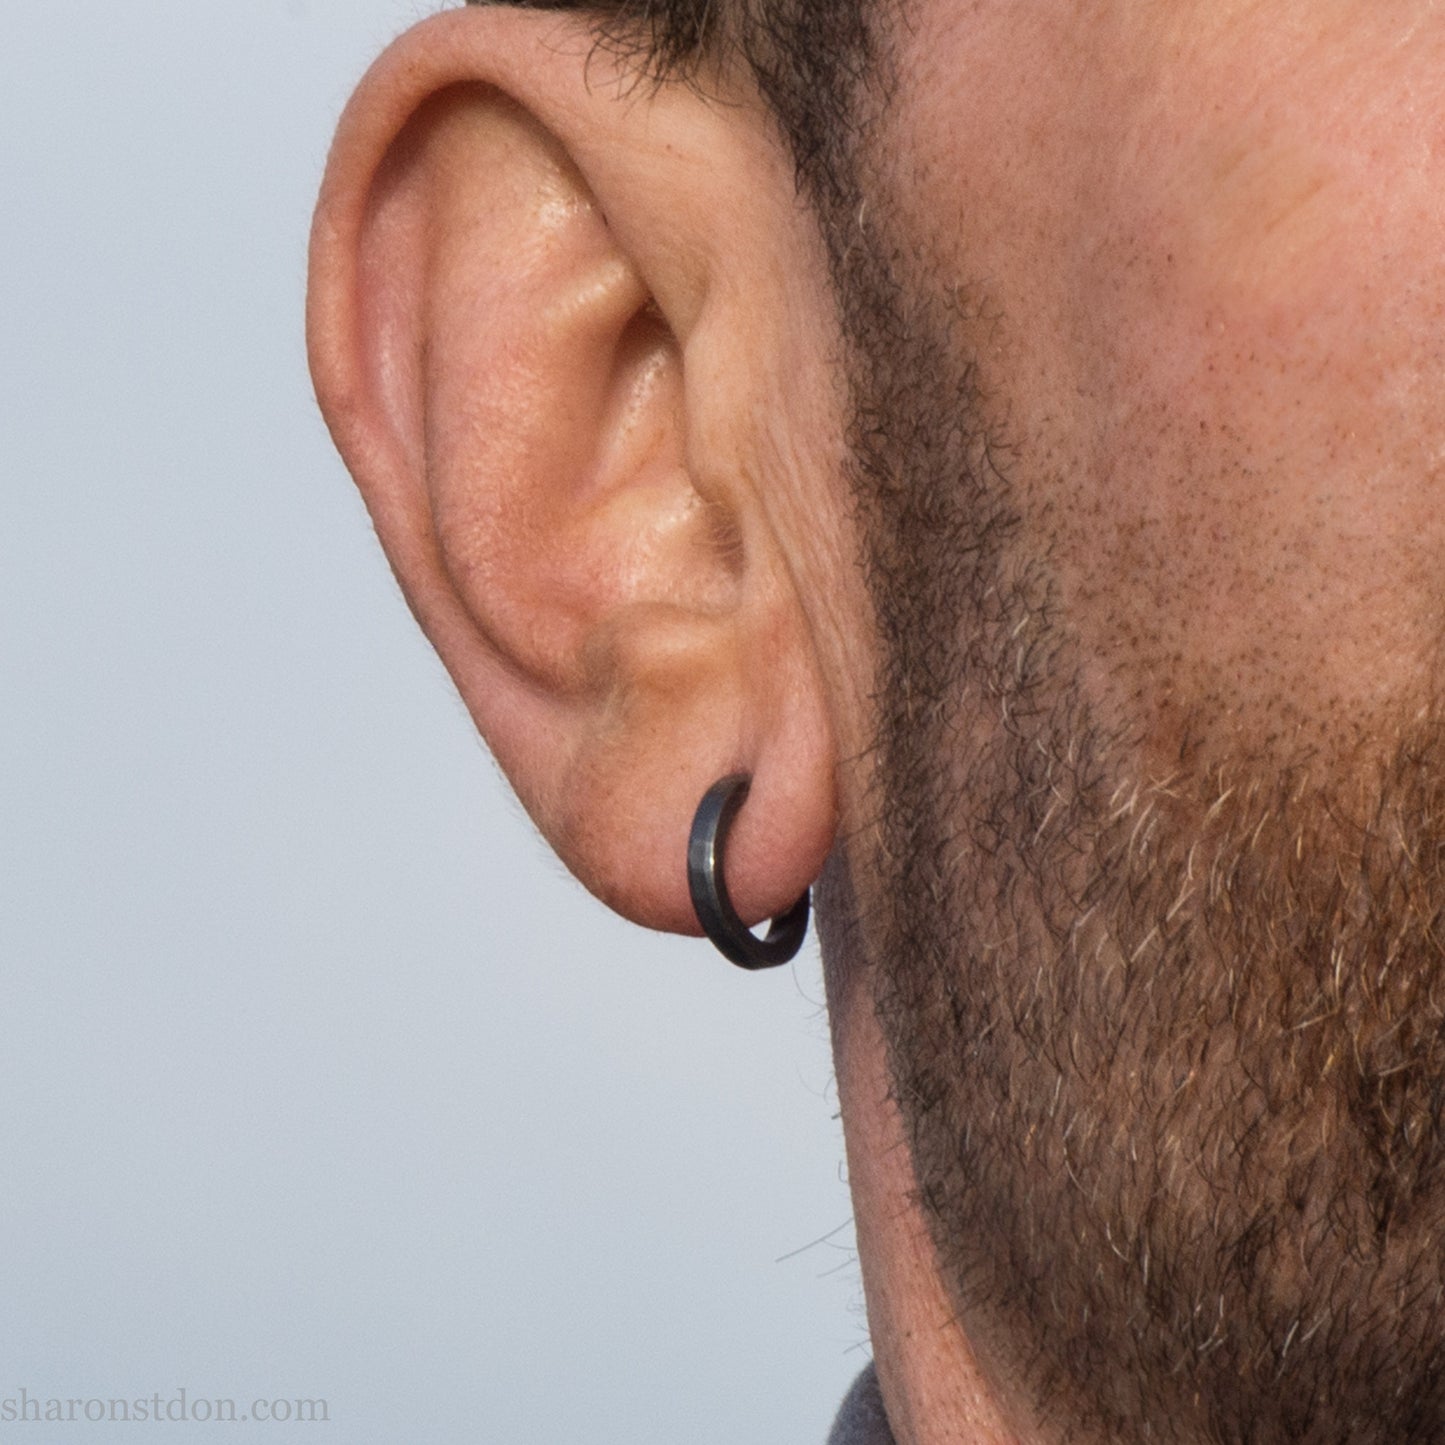 14 x 2mm small black silver hoop earrings